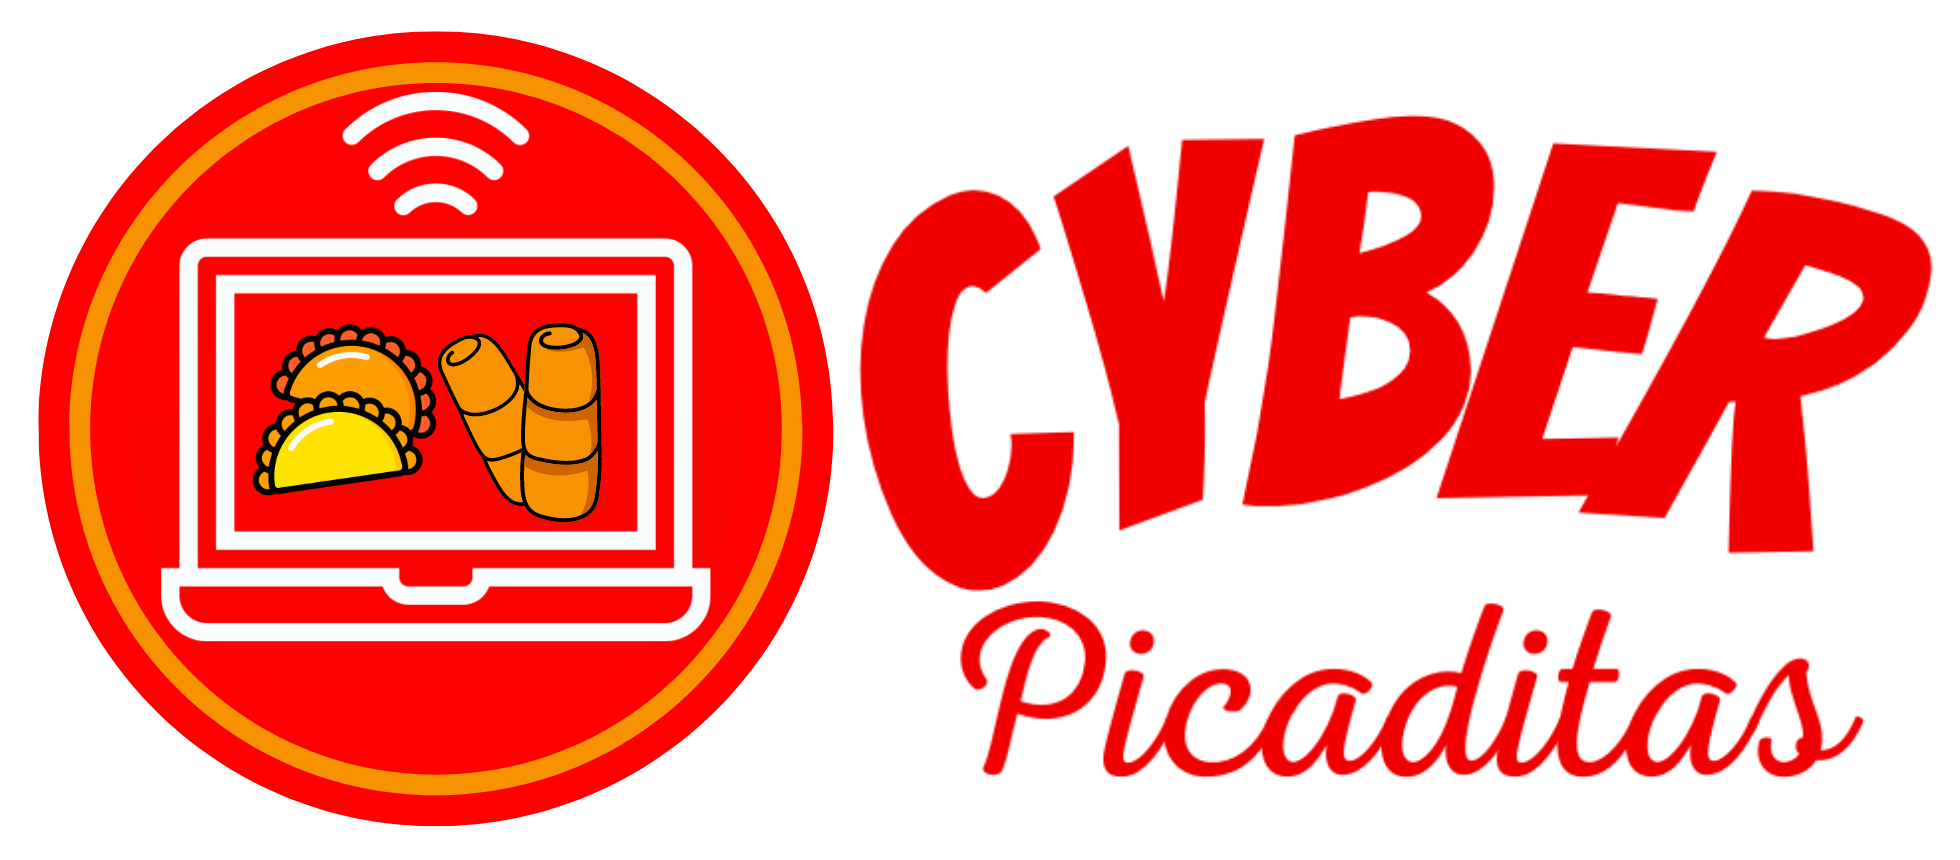 Cyber Picaditas